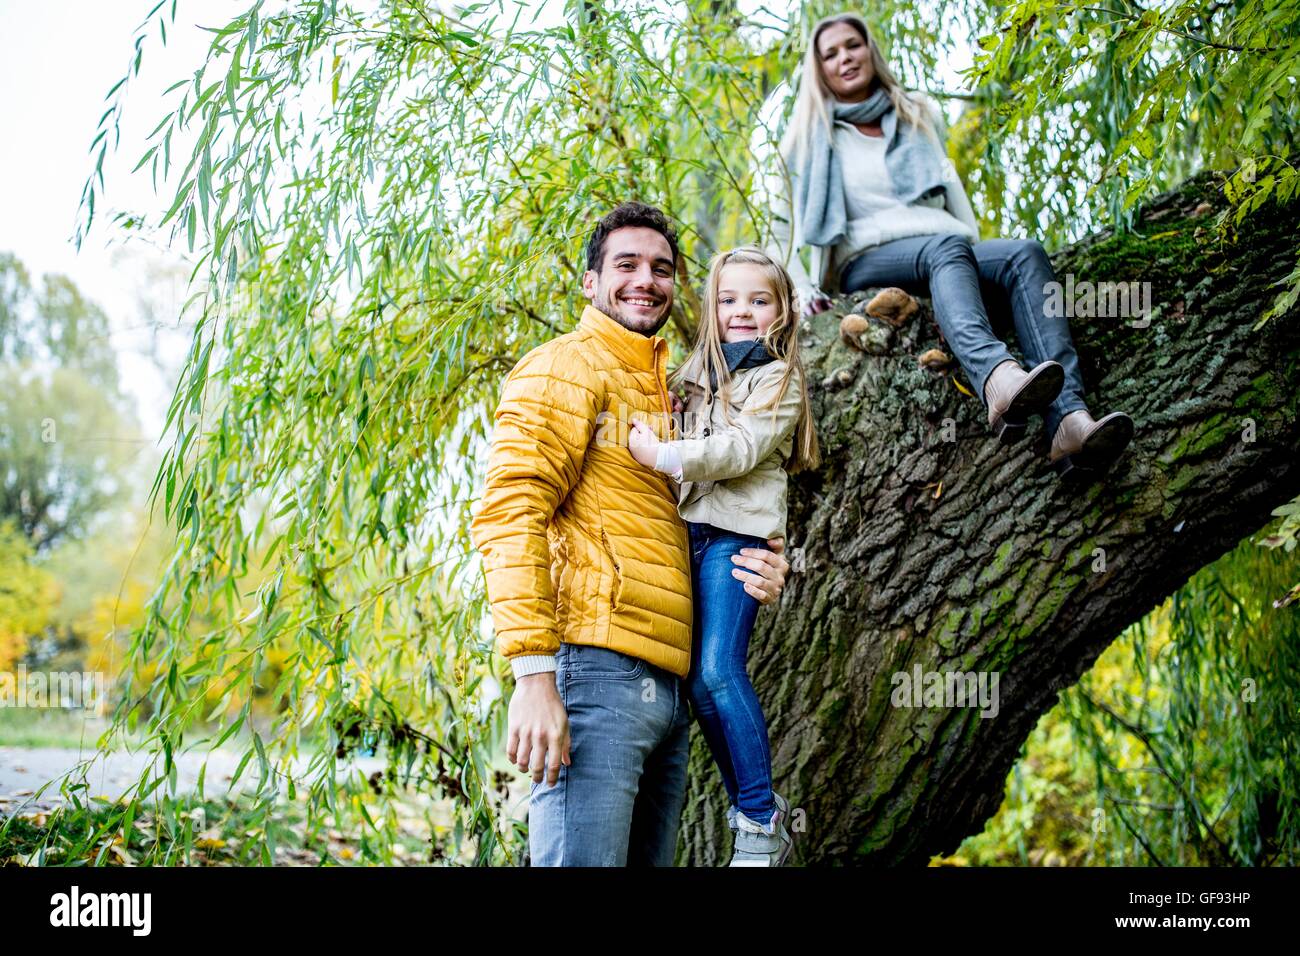 -MODELL VERÖFFENTLICHT. Vater mit Tochter, Mutter saß am Baum, Lächeln, Porträt. Stockfoto